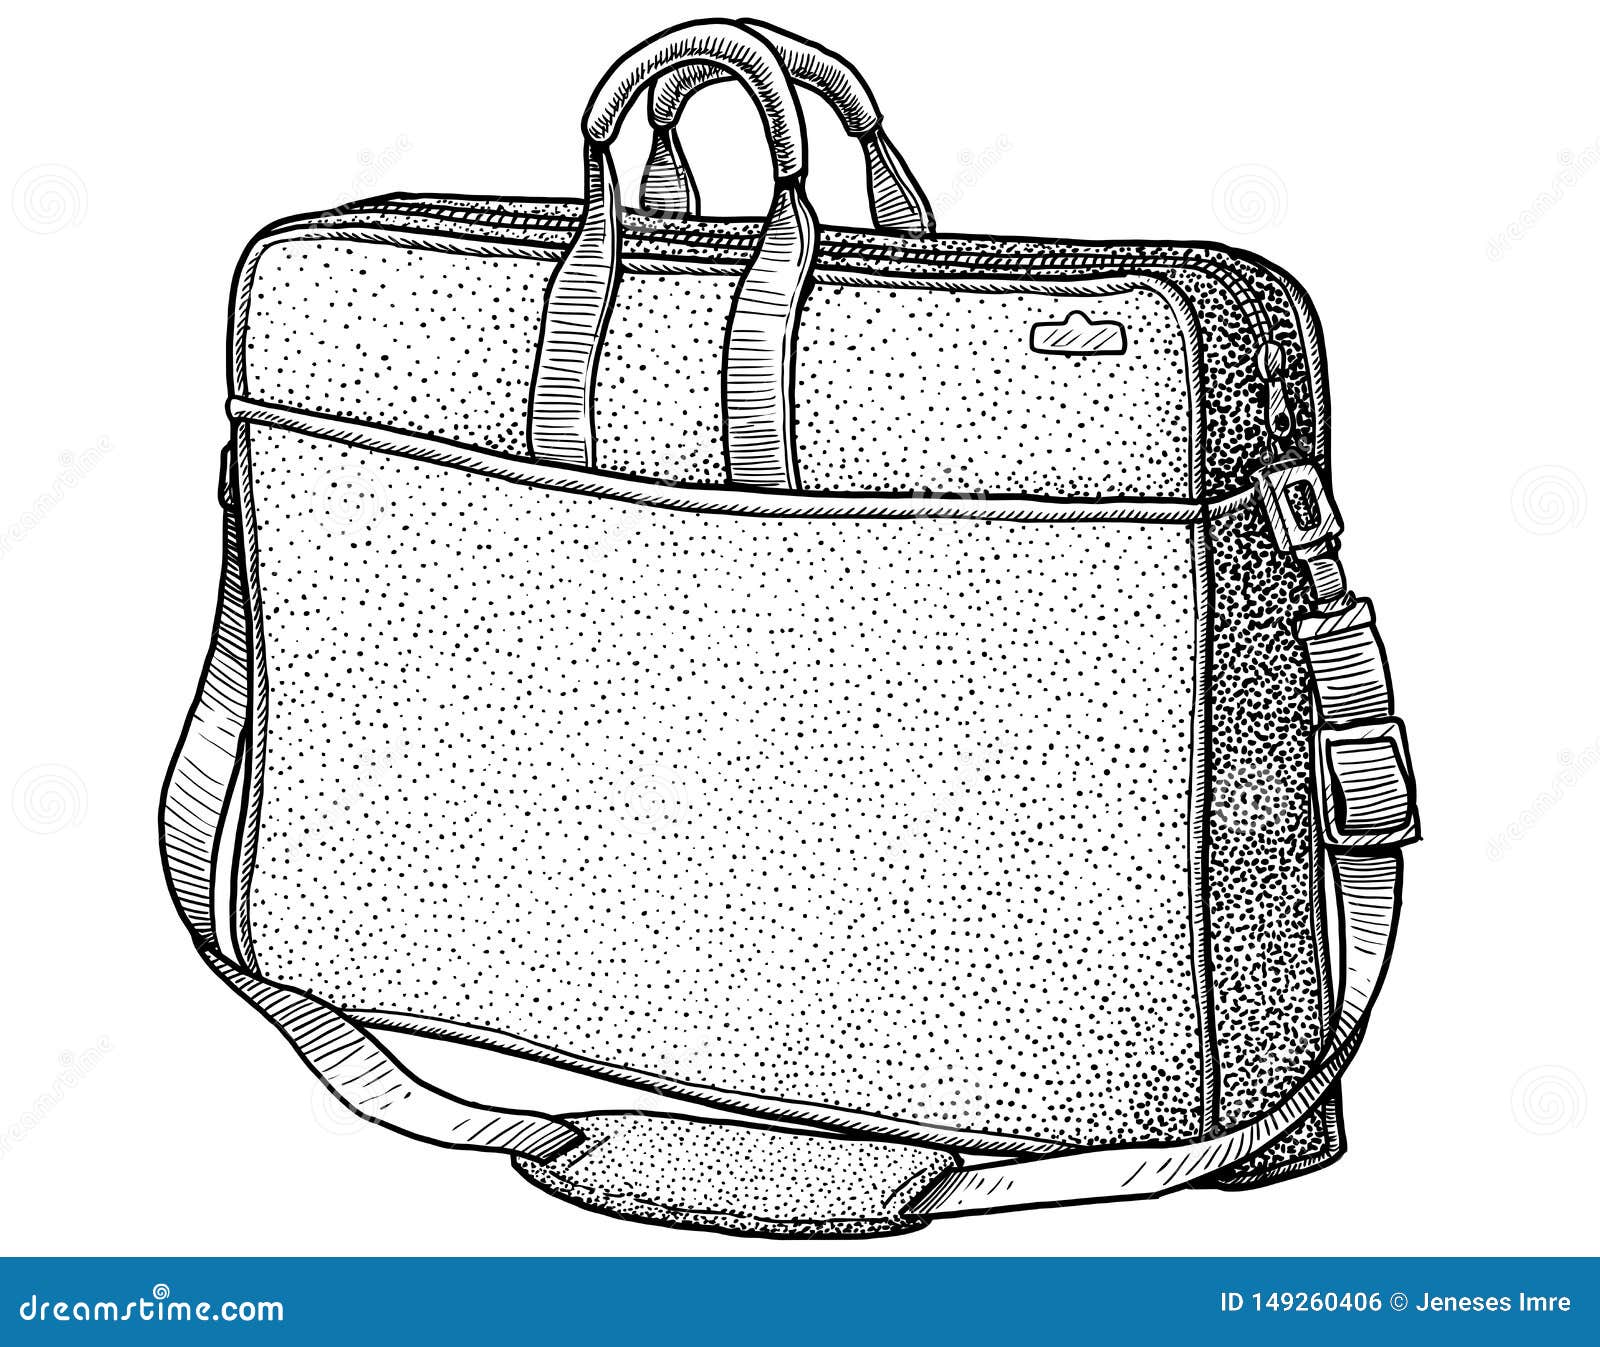 5933 Office Bag Sketch Images Stock Photos  Vectors  Shutterstock